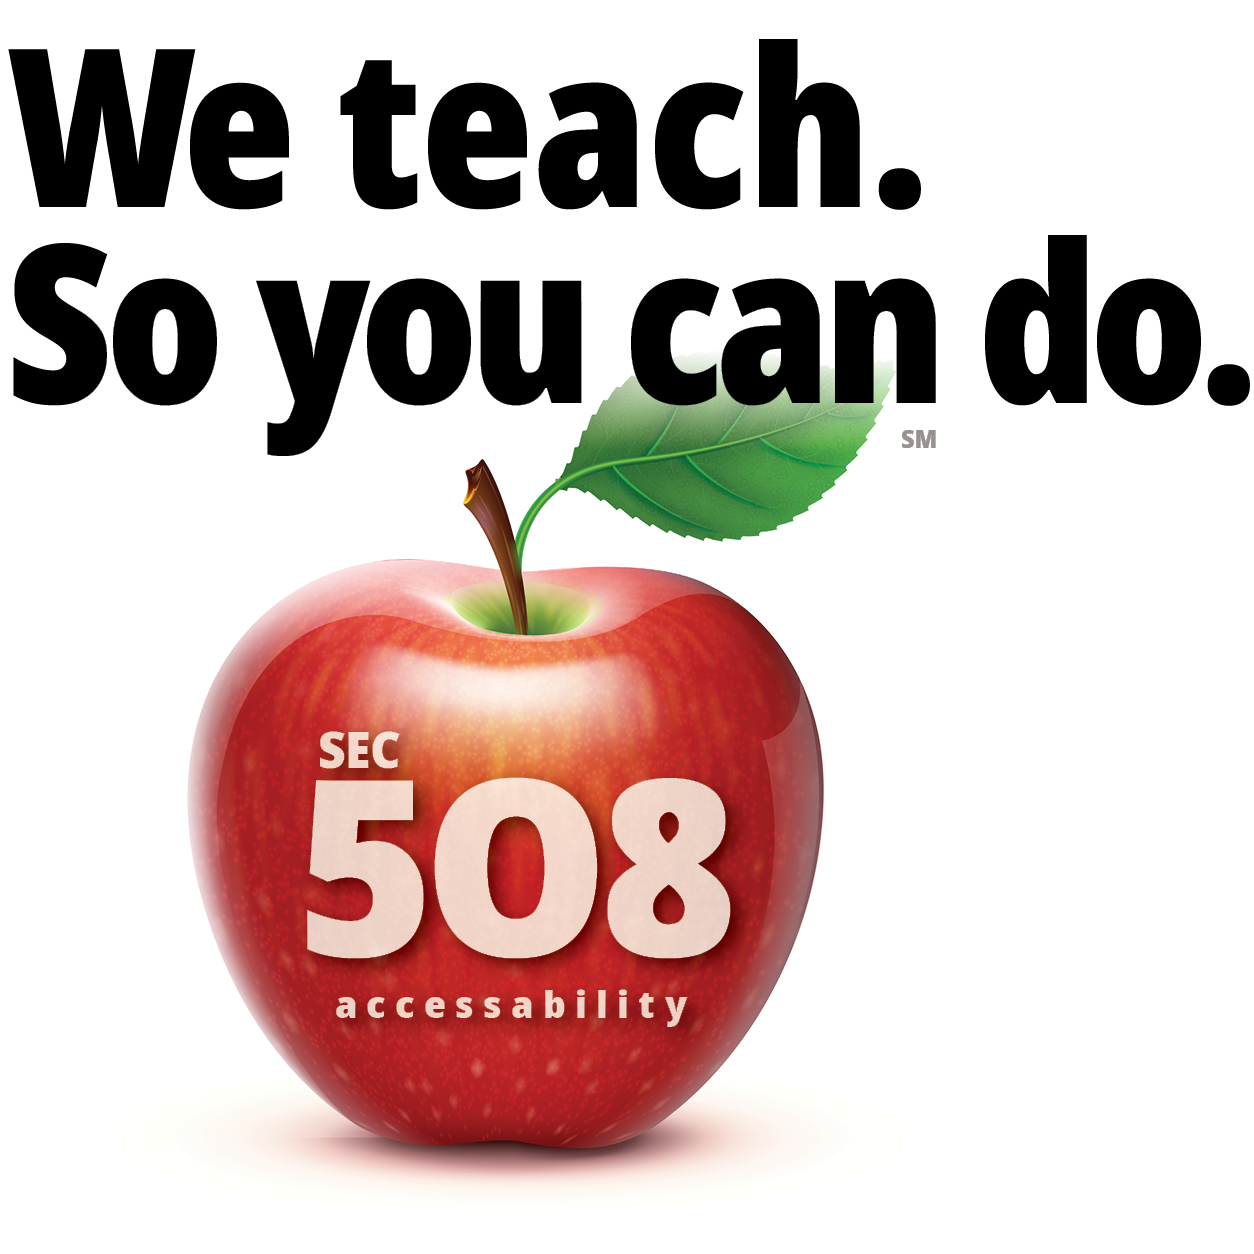 We teach. So you can do. Sec. 508 accessibility.